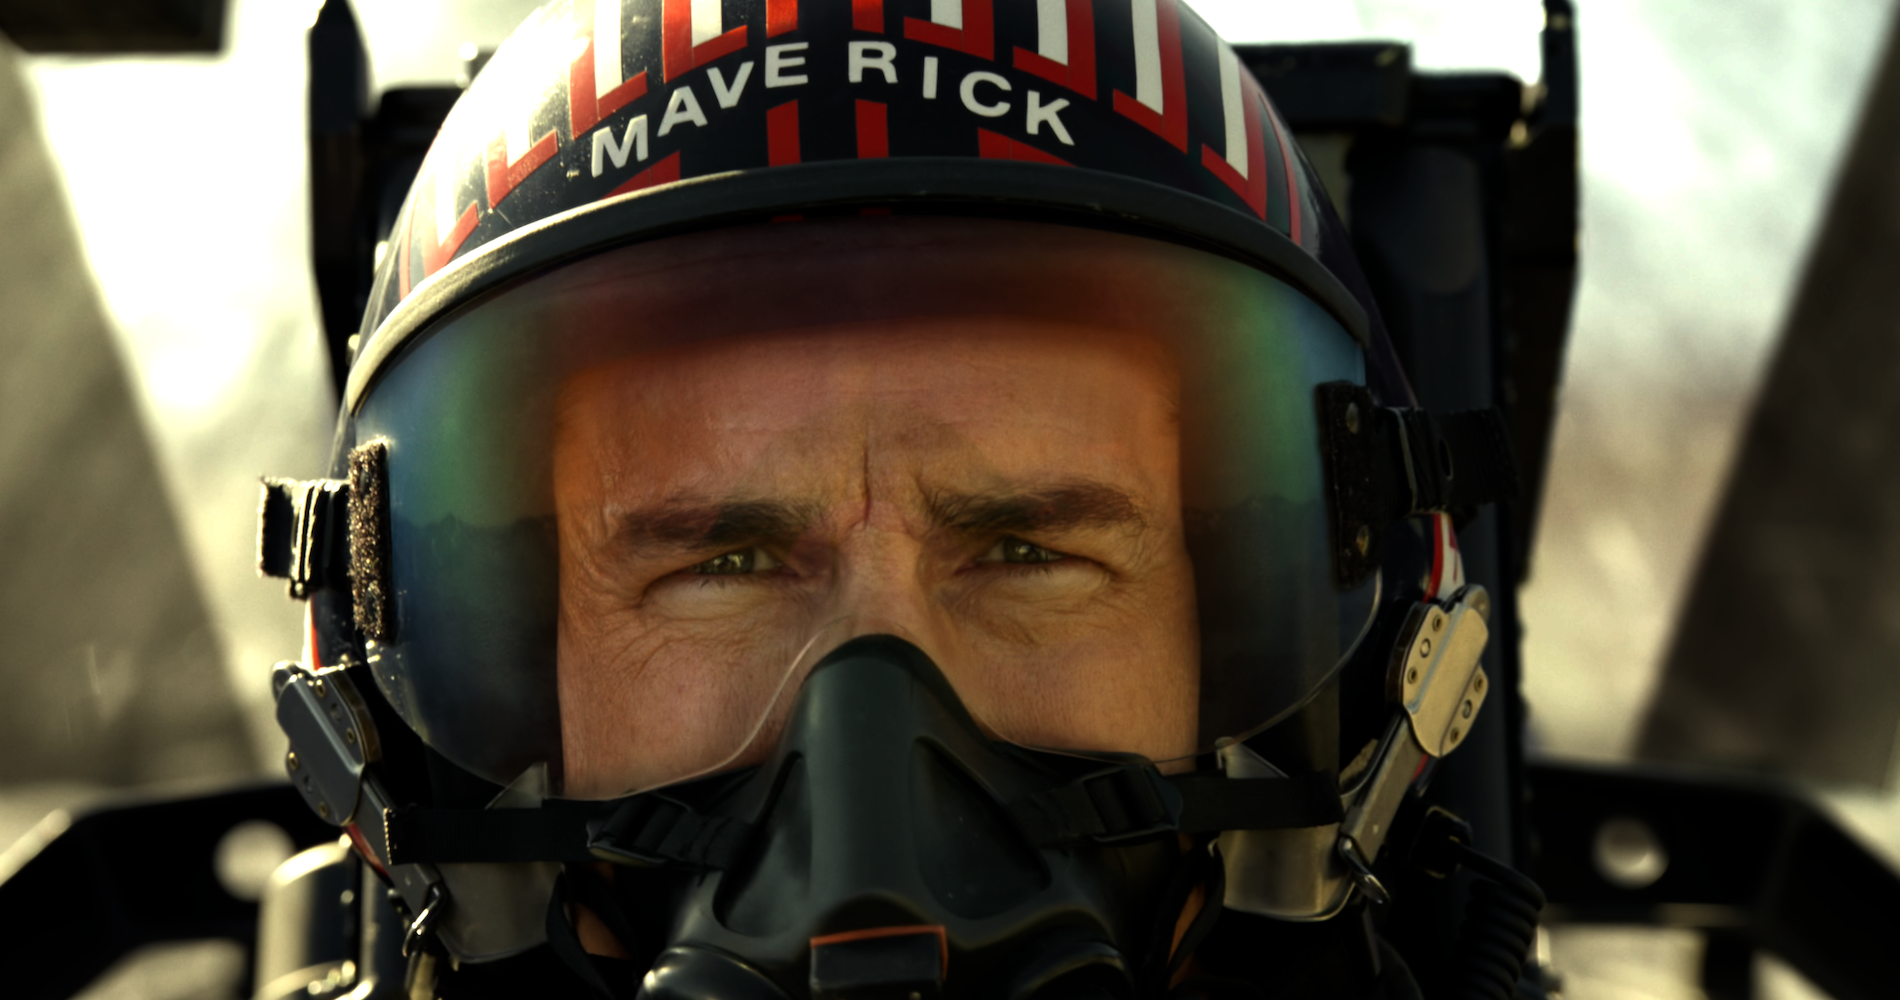 Top Gun Maverick' Copyright Lawsuit Should Be Grounded: Paramount – Deadline